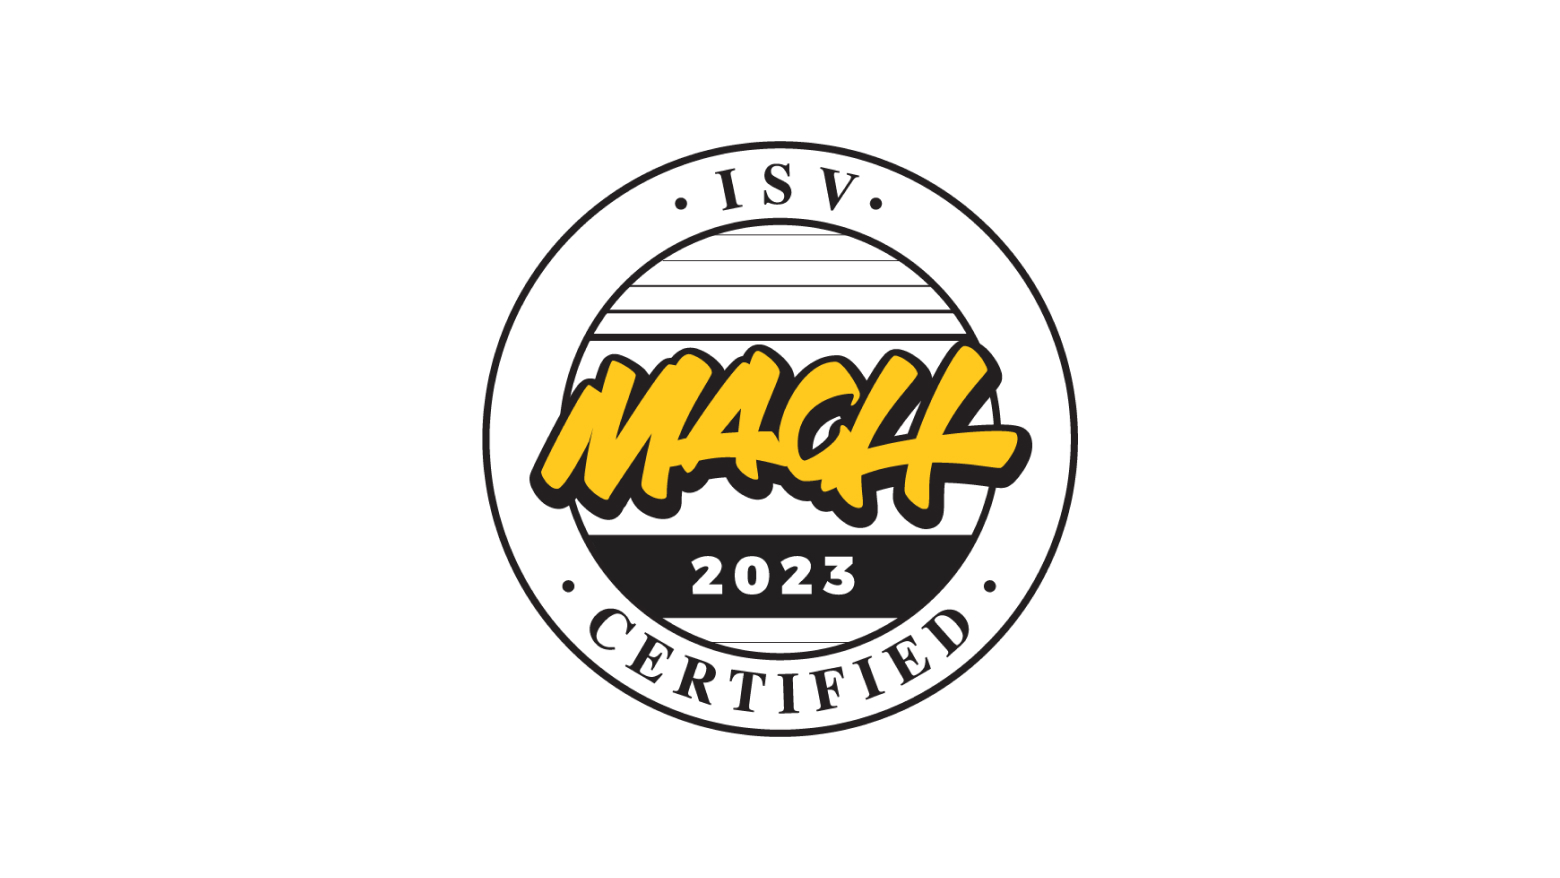 Certification MACH ISV, 2023 Seal